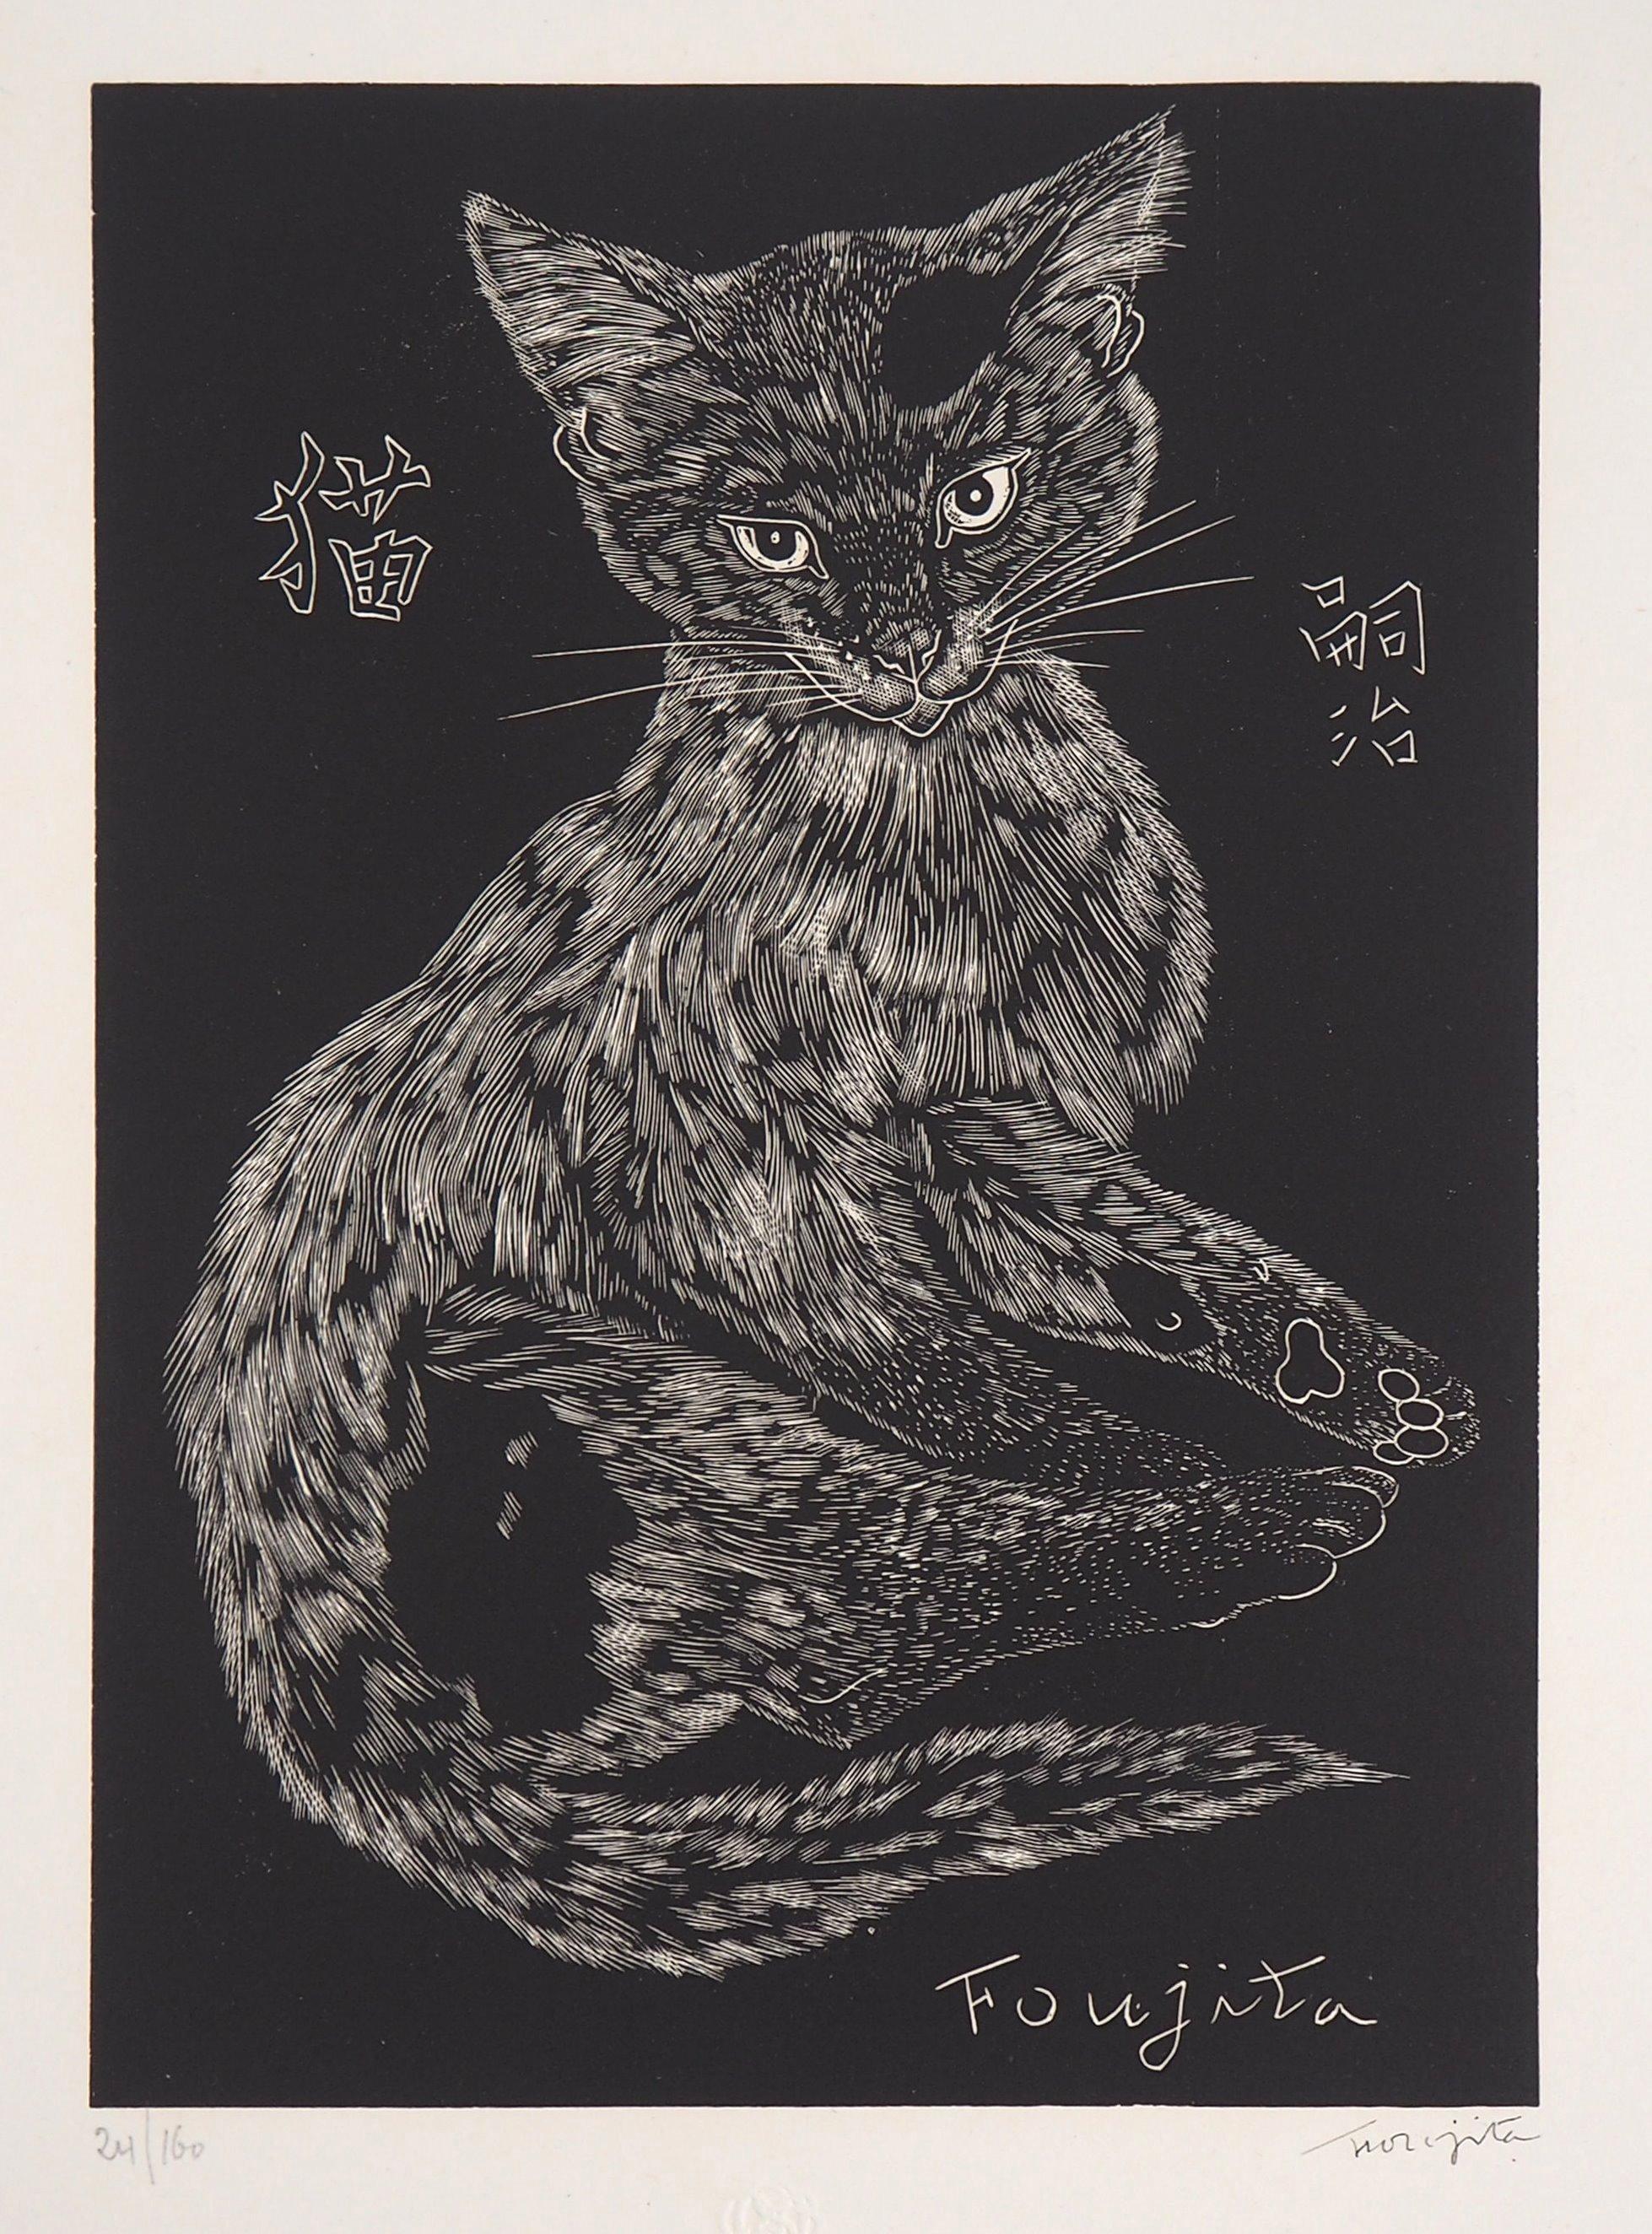 Animal Print Leonard Tsuguharu Foujita - Cat - Taille sur bois originale, signée et numérotée /160 - Buisson #27-03